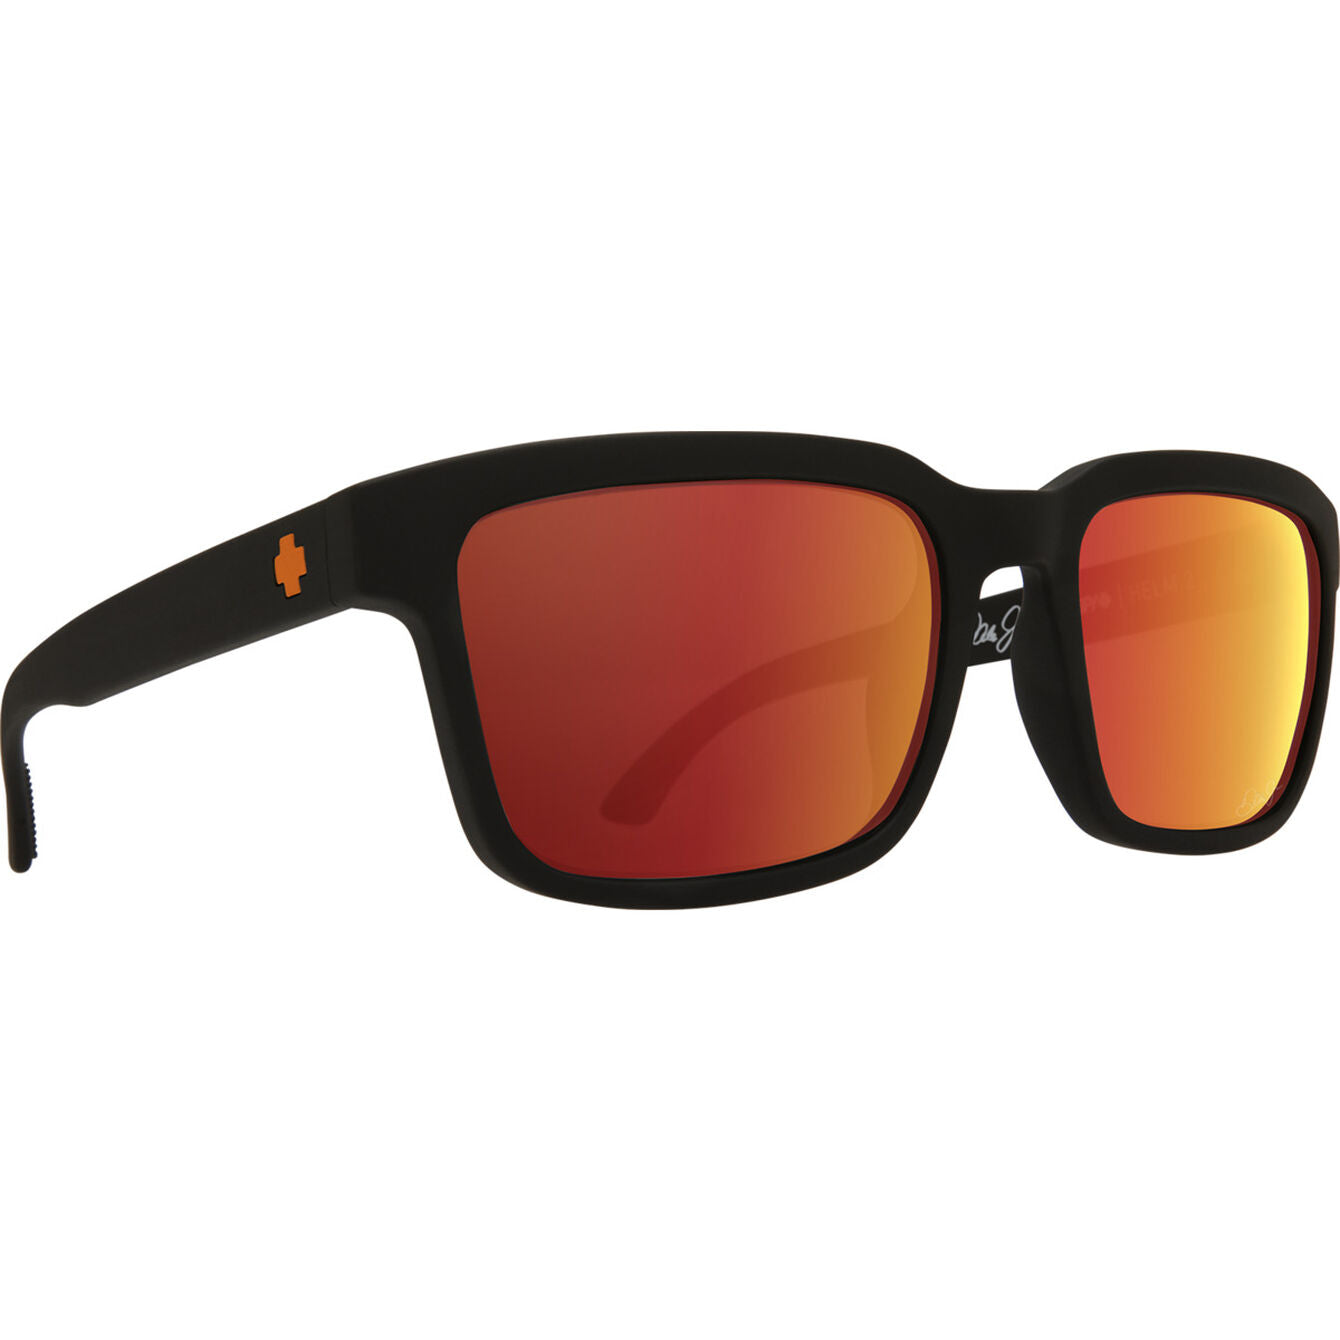 SPY Helm 2 Dale Jr Sunglasses - Matte Black/Happy Gray Green/Orange Spectra - VENUE.